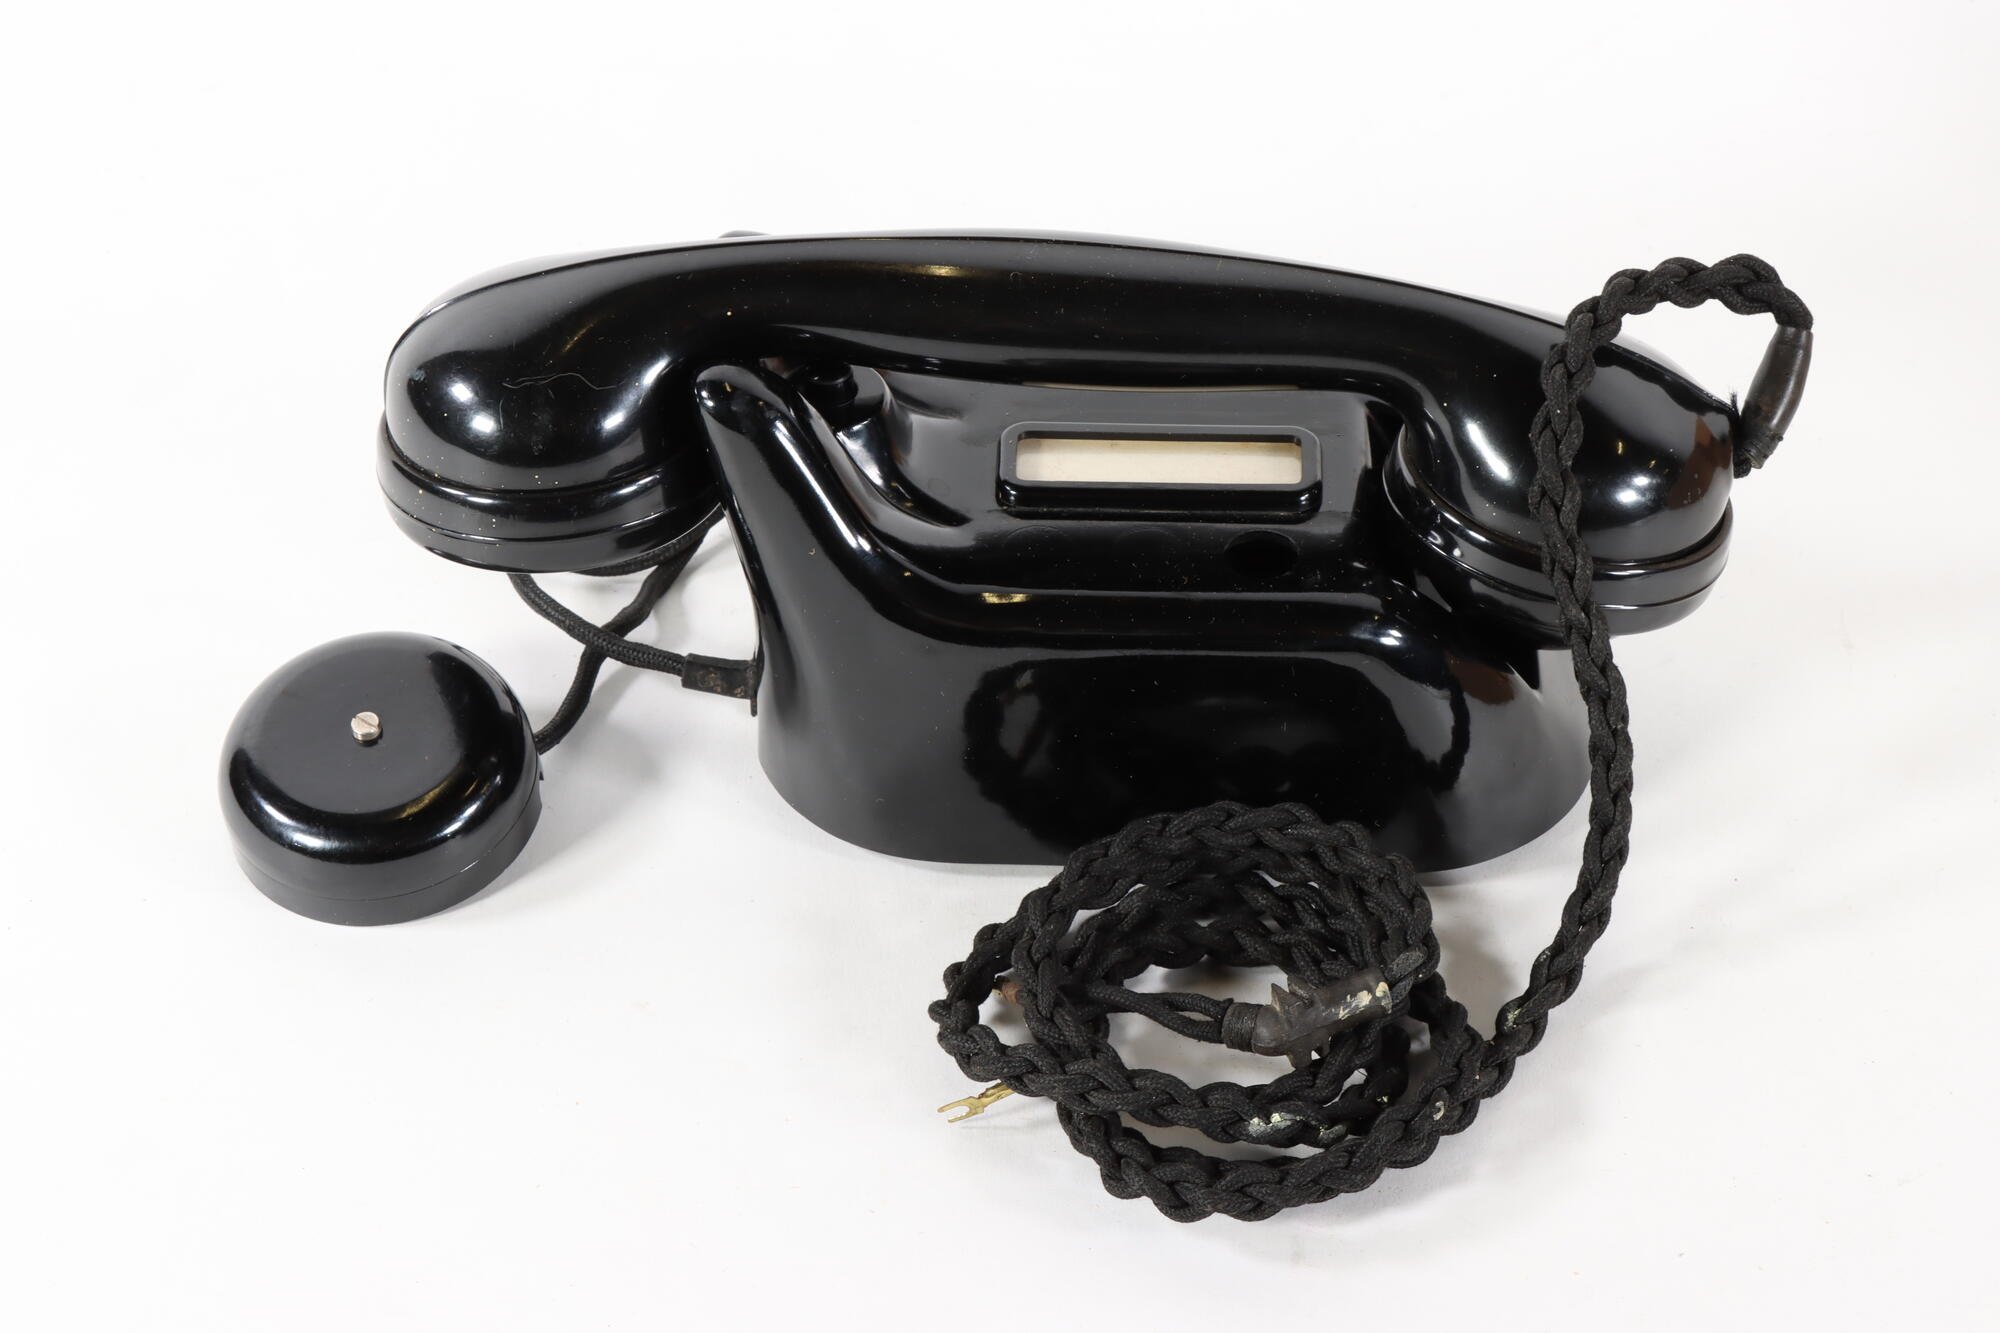 Telefonapparat, Front (Industriemuseum Chemnitz; Fotografin: Marion Kaiser CC BY-NC-SA)